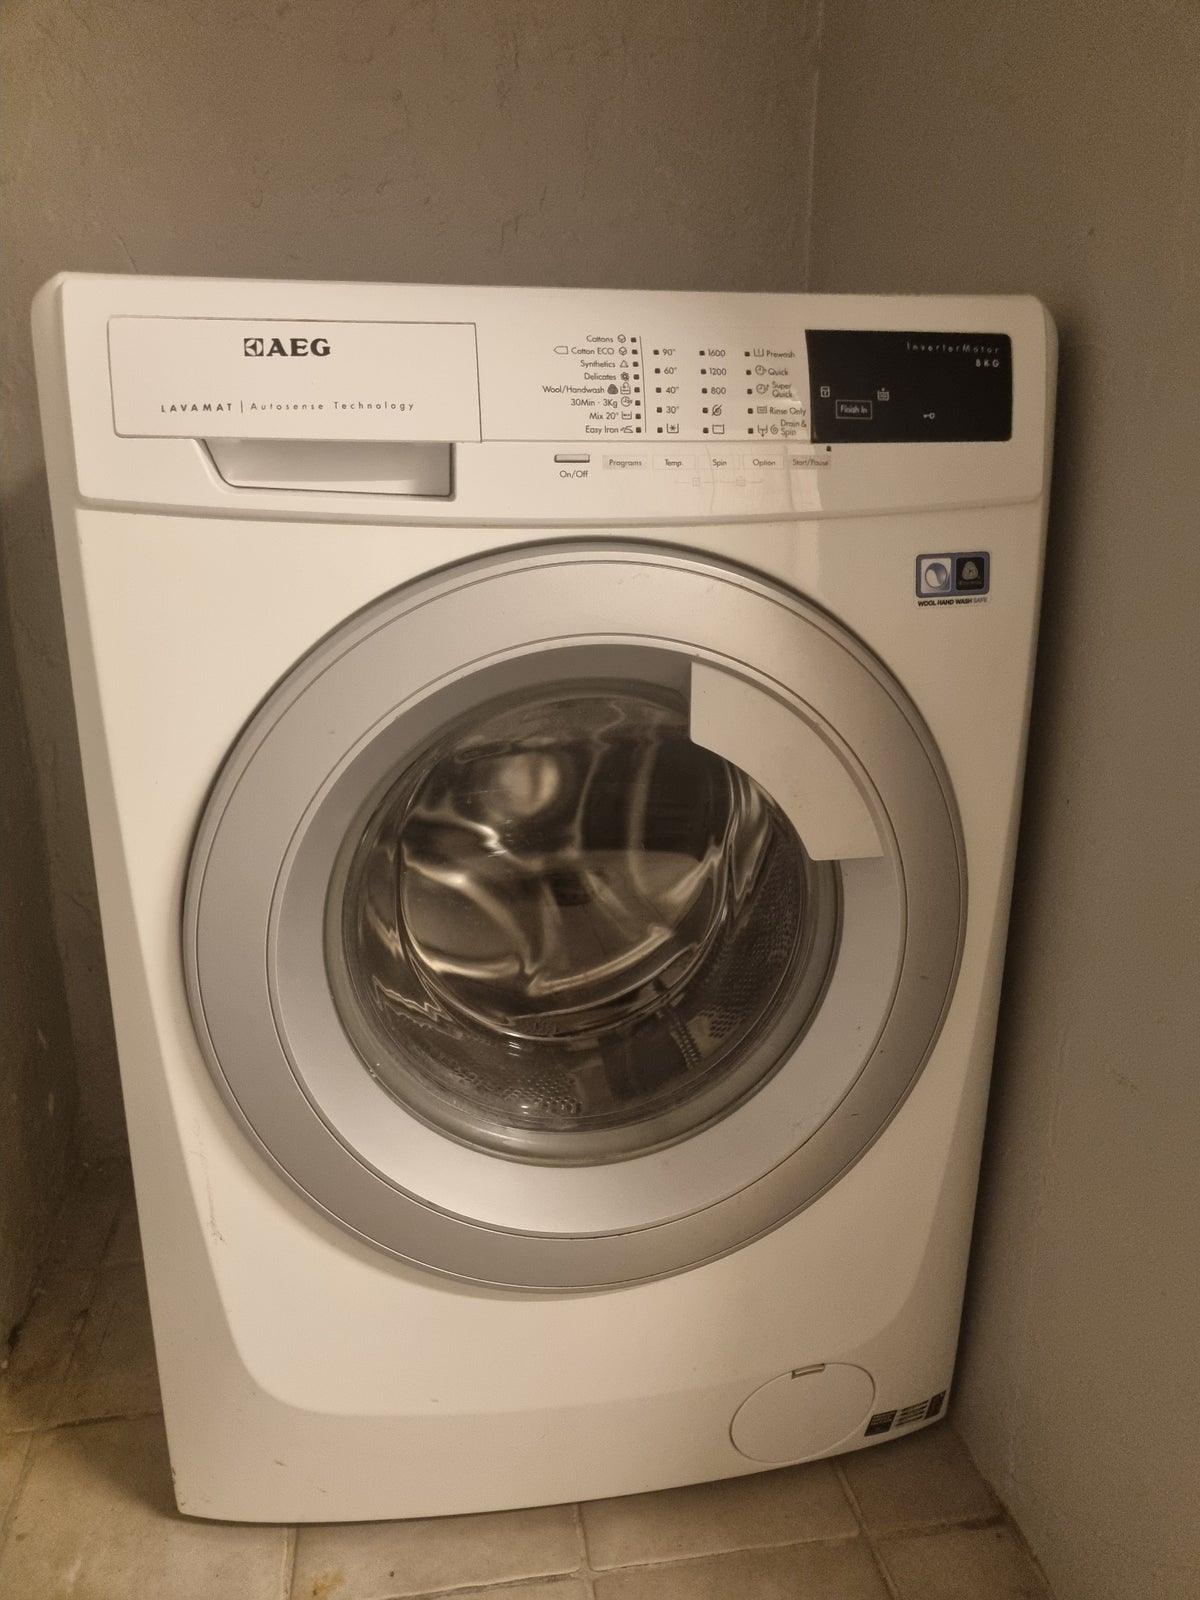 AEG vaskemaskine, LFL67806, frontbetjent